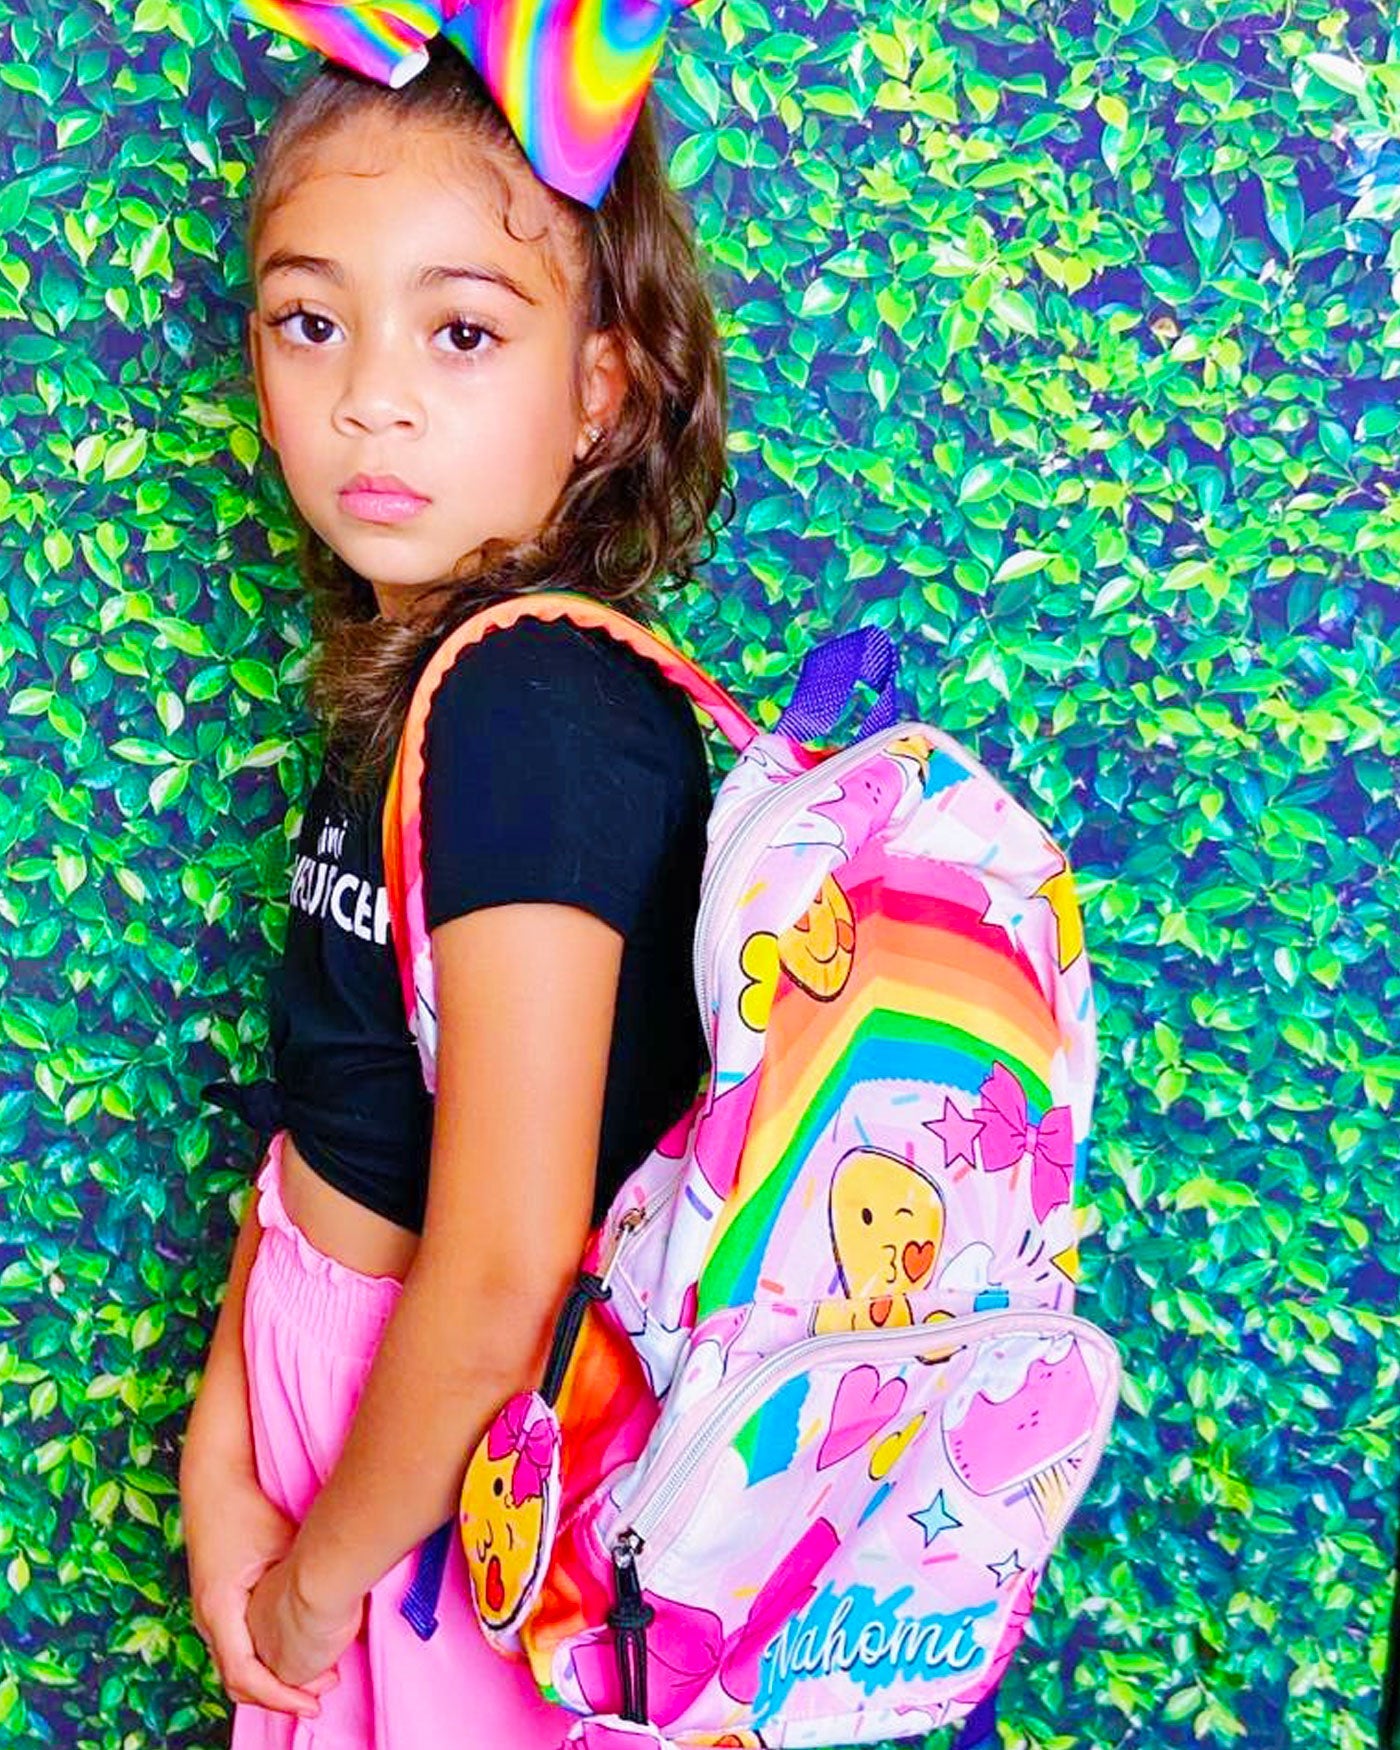 madi backpack sweet rainbow